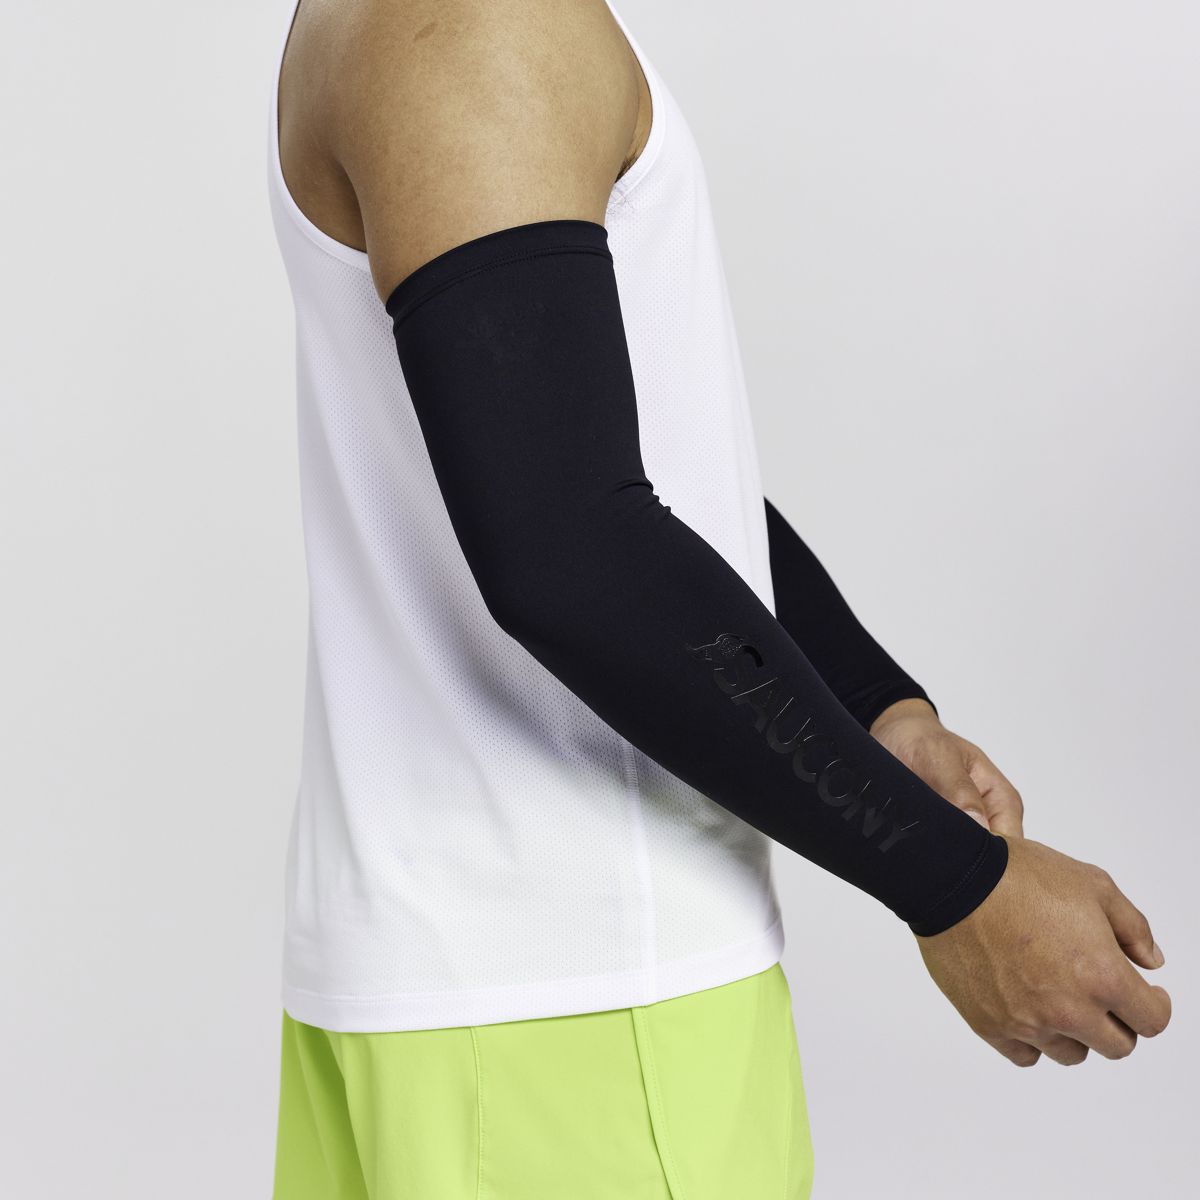 Nike+ Forearm Compression Sleeve - Large/X Large - Black - http